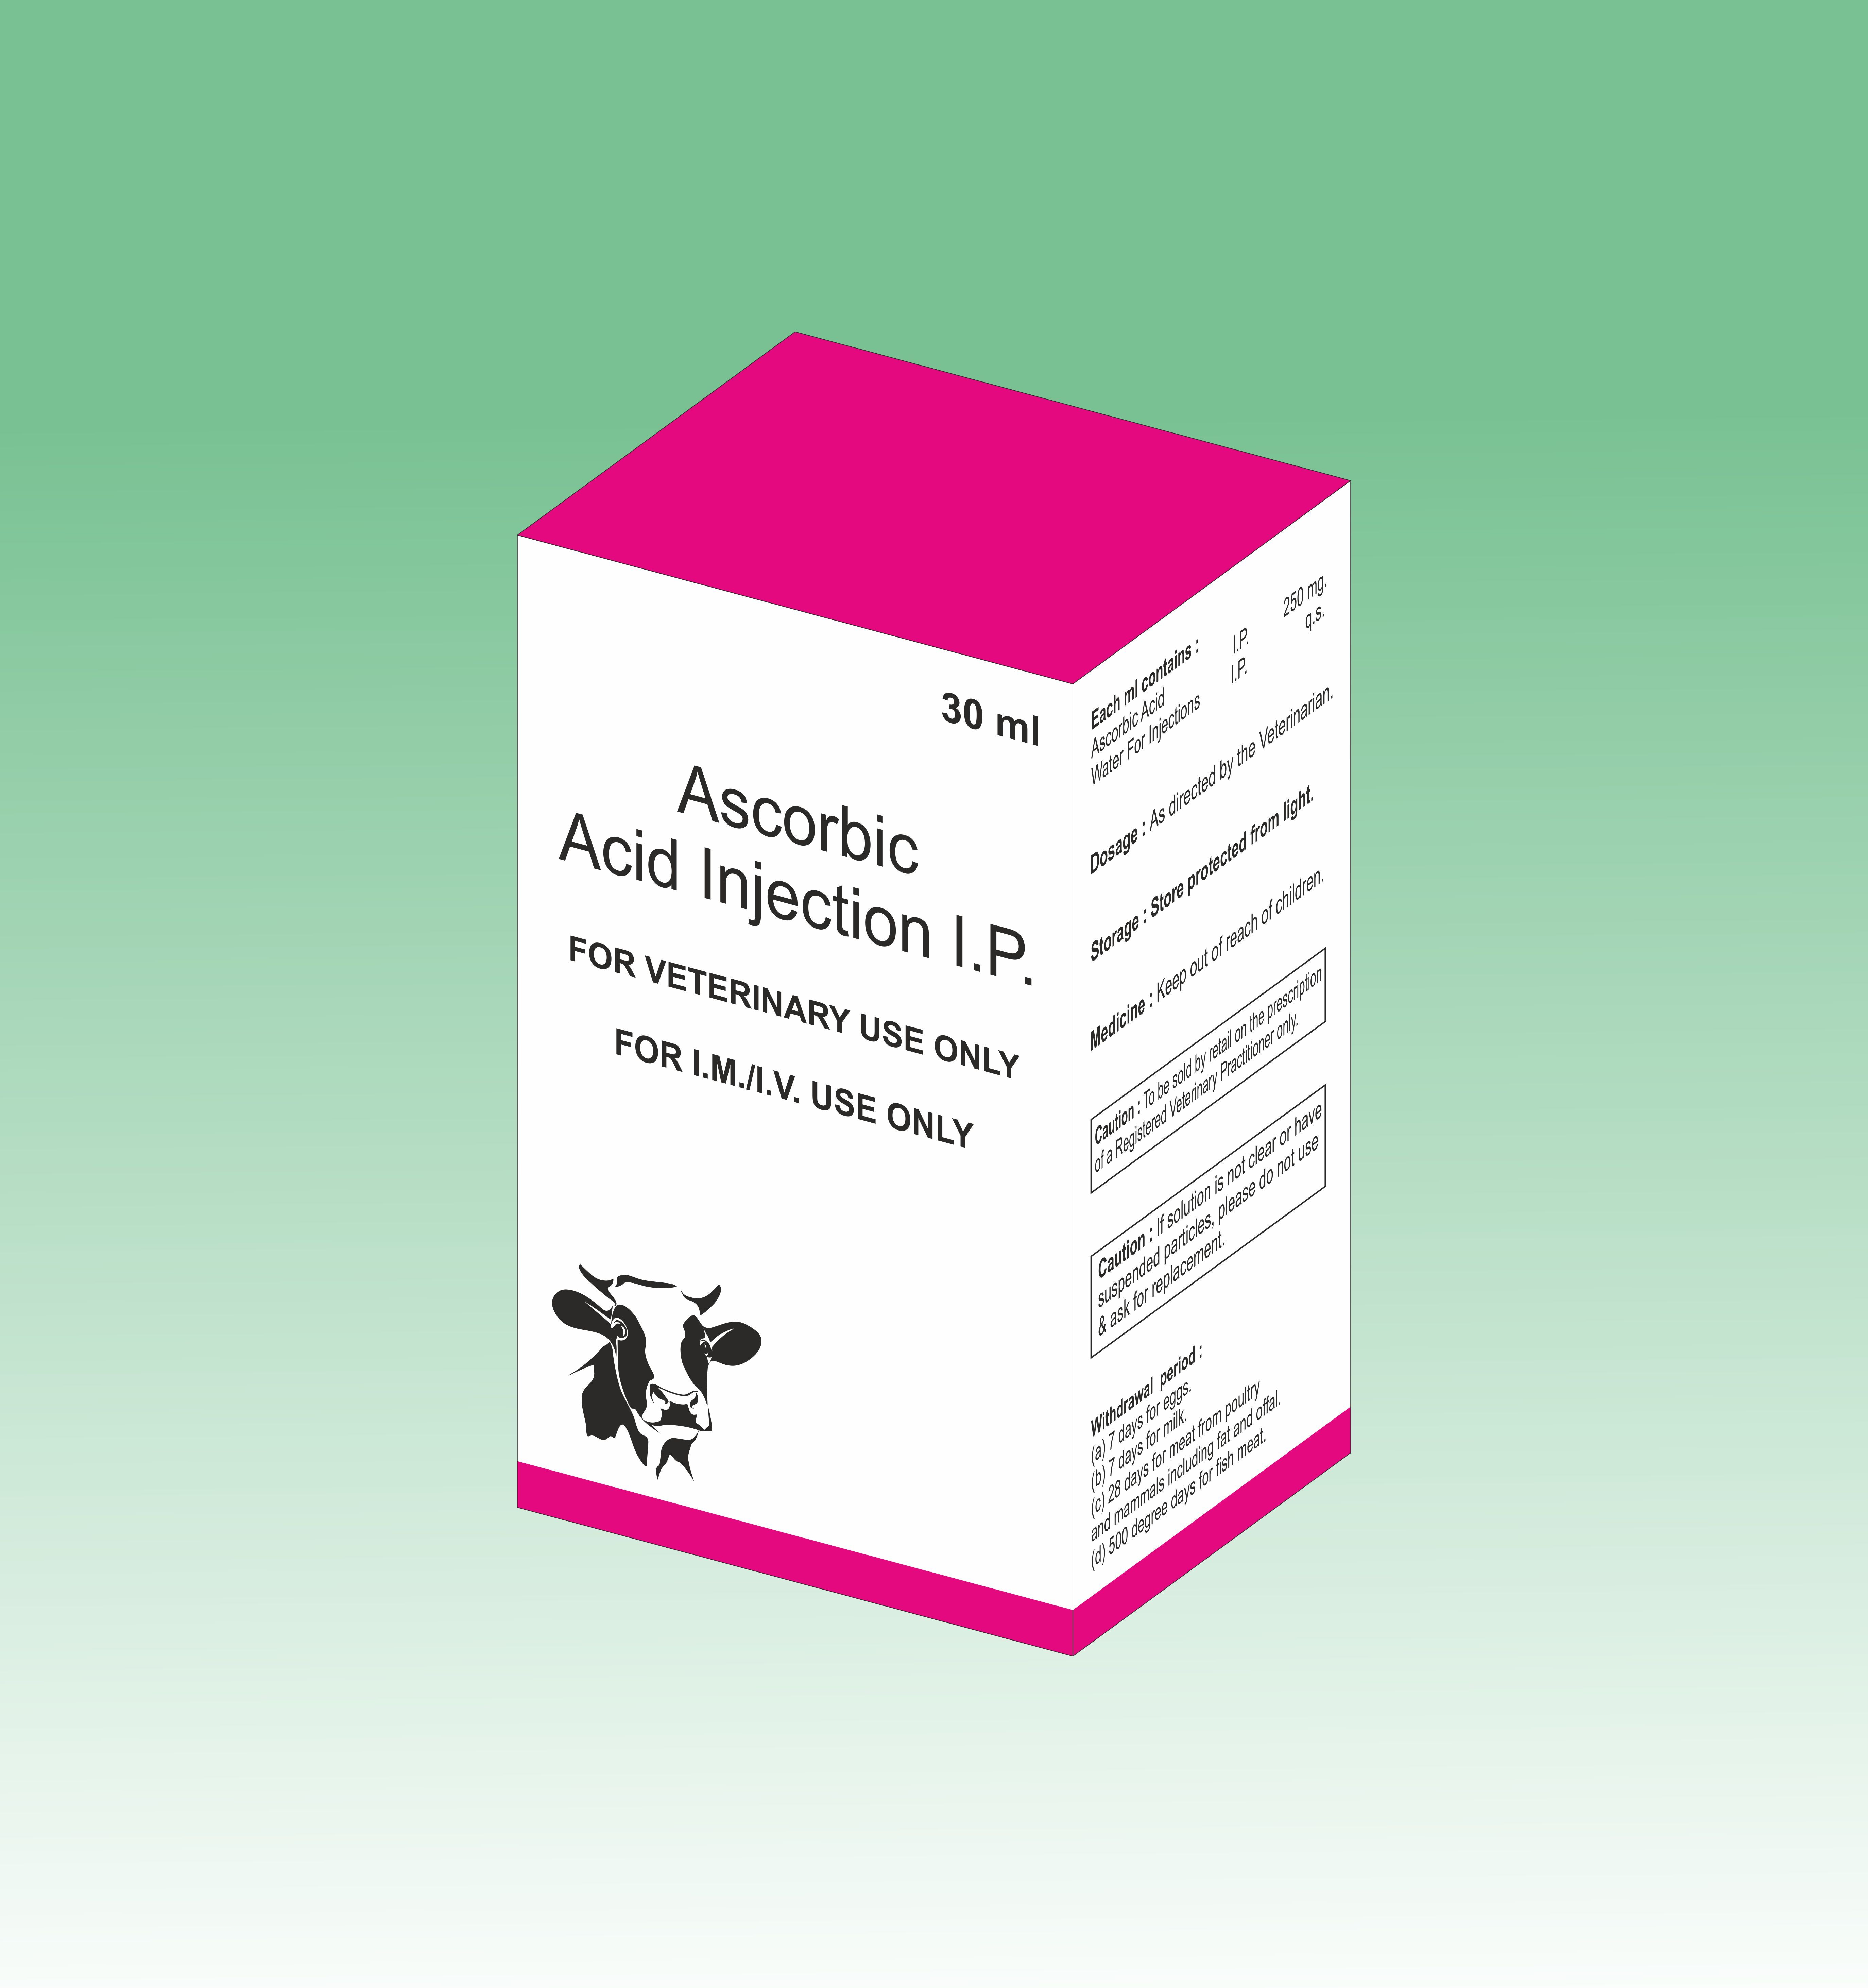 Amoxycilin injection